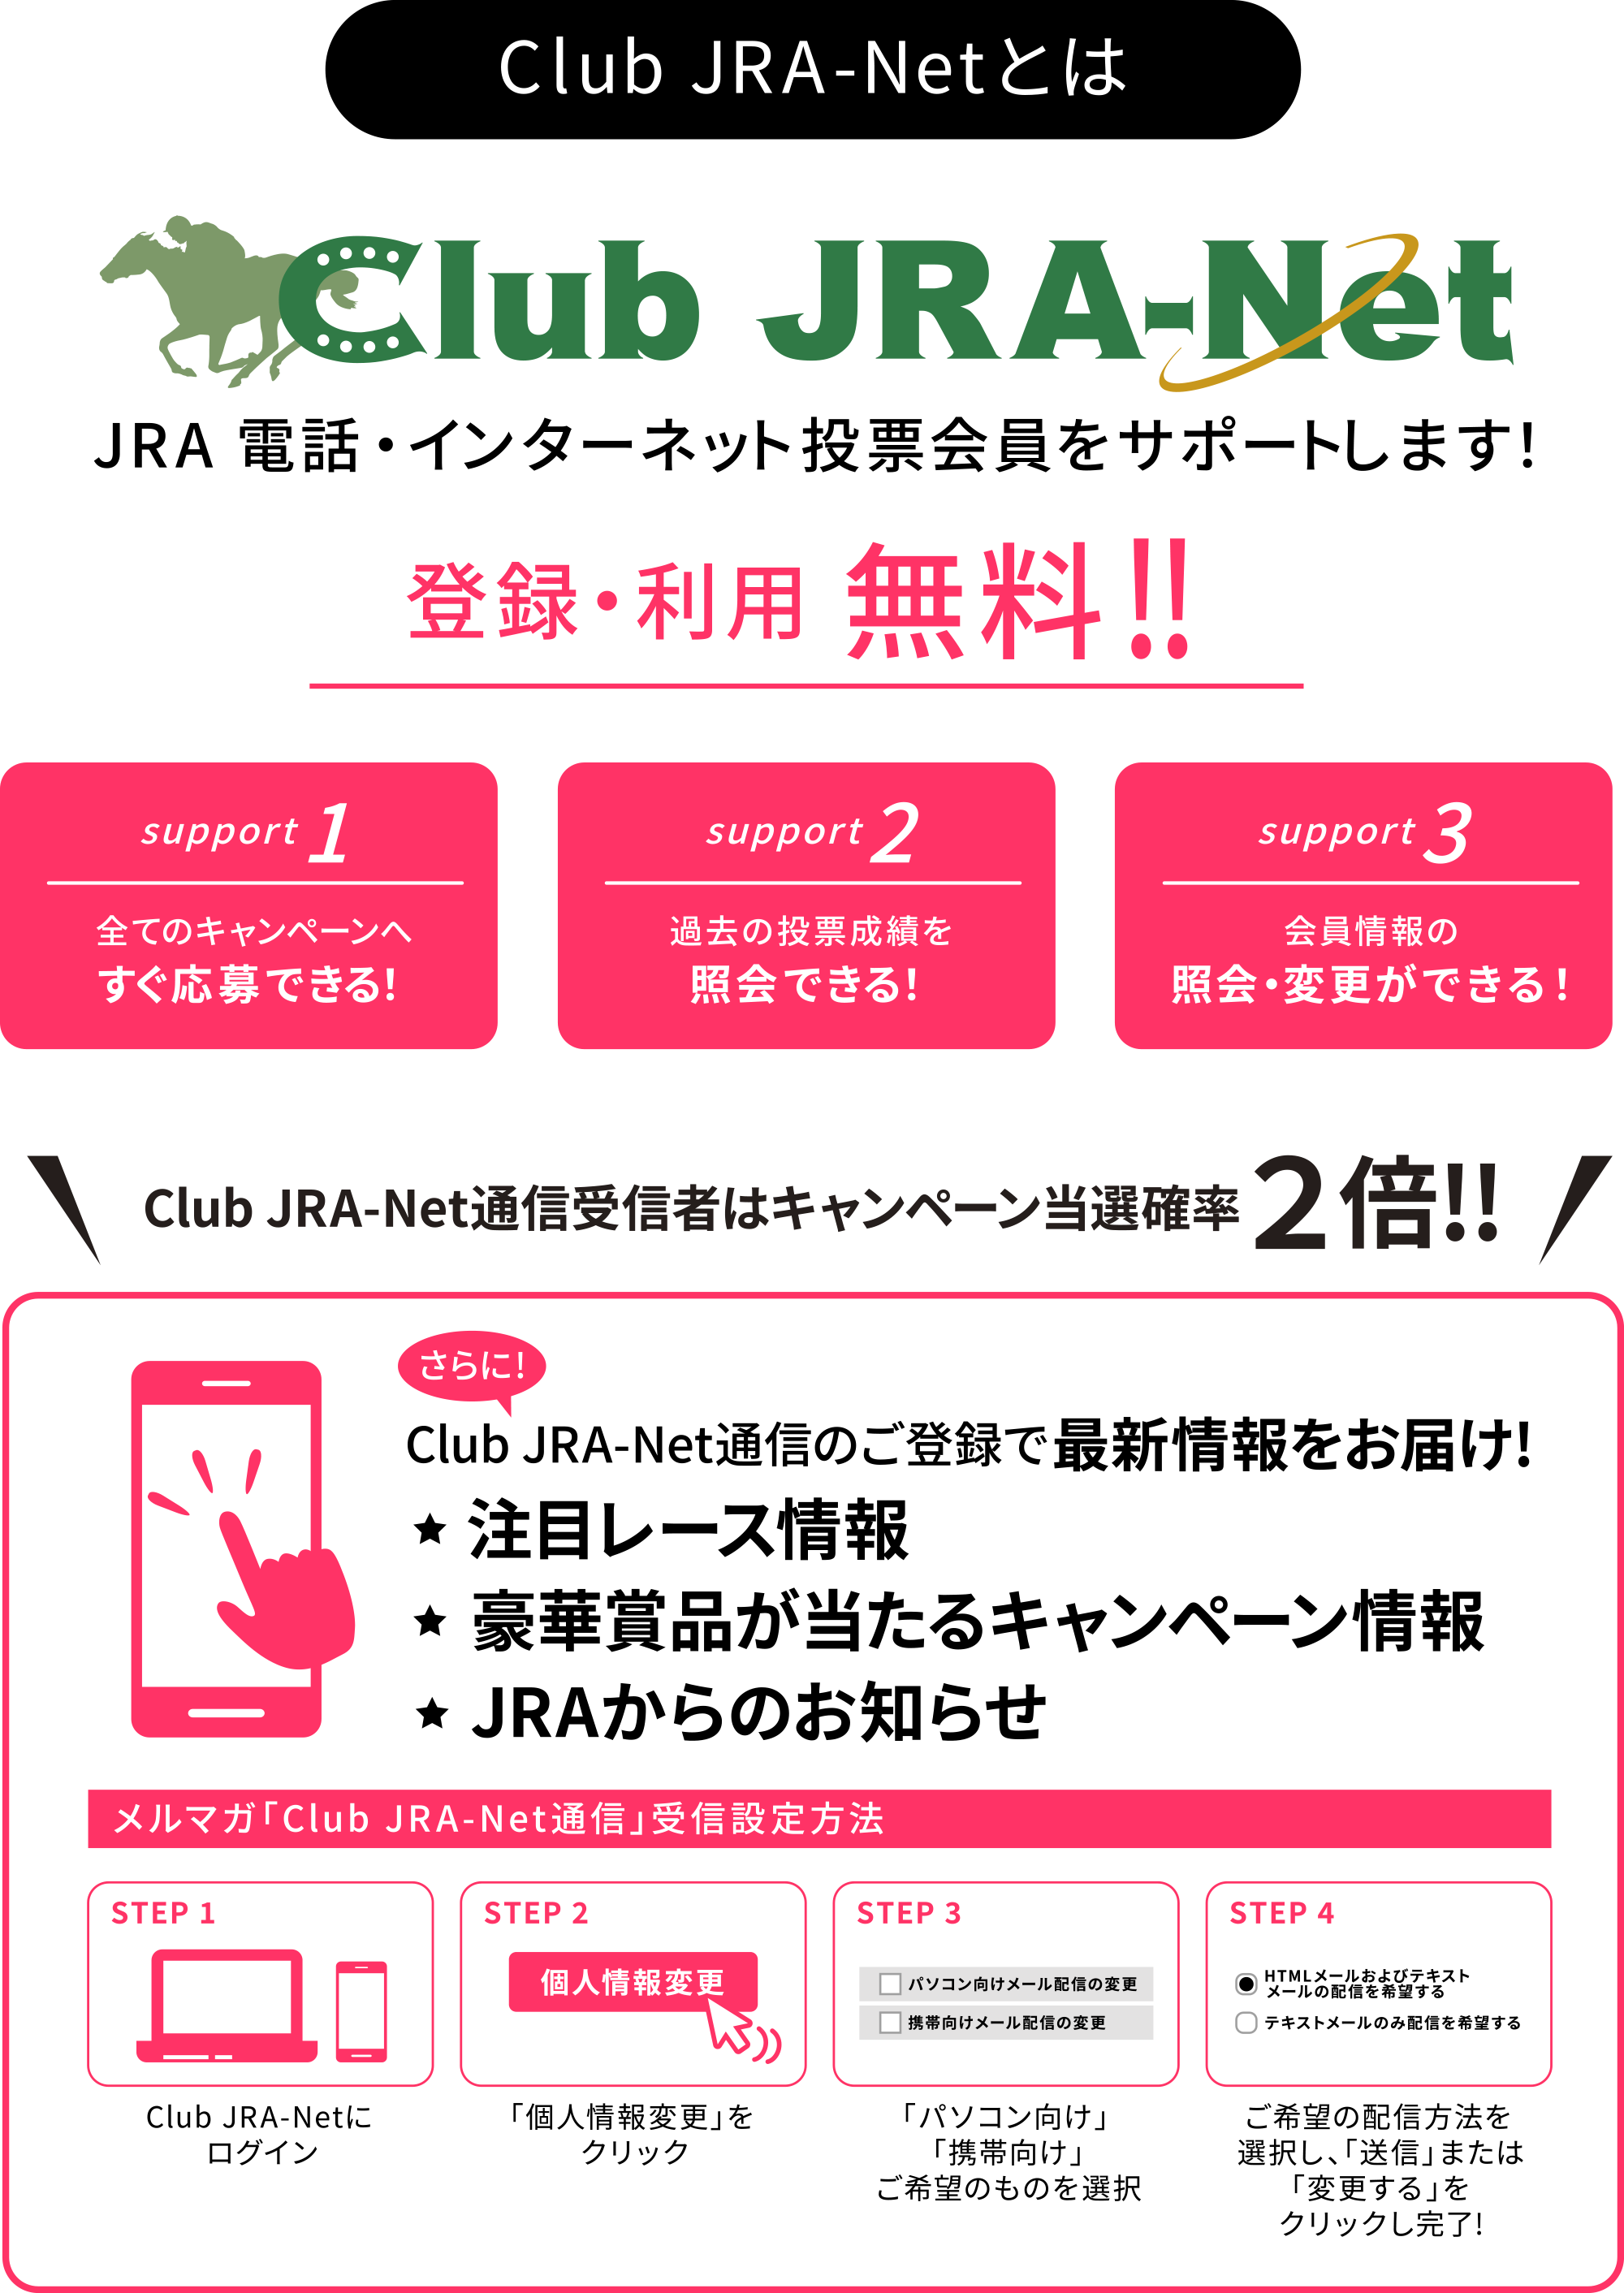 Club JRA-Net JRA 電話・インターネット投票会員をサポートします！登録・利用 無料！！